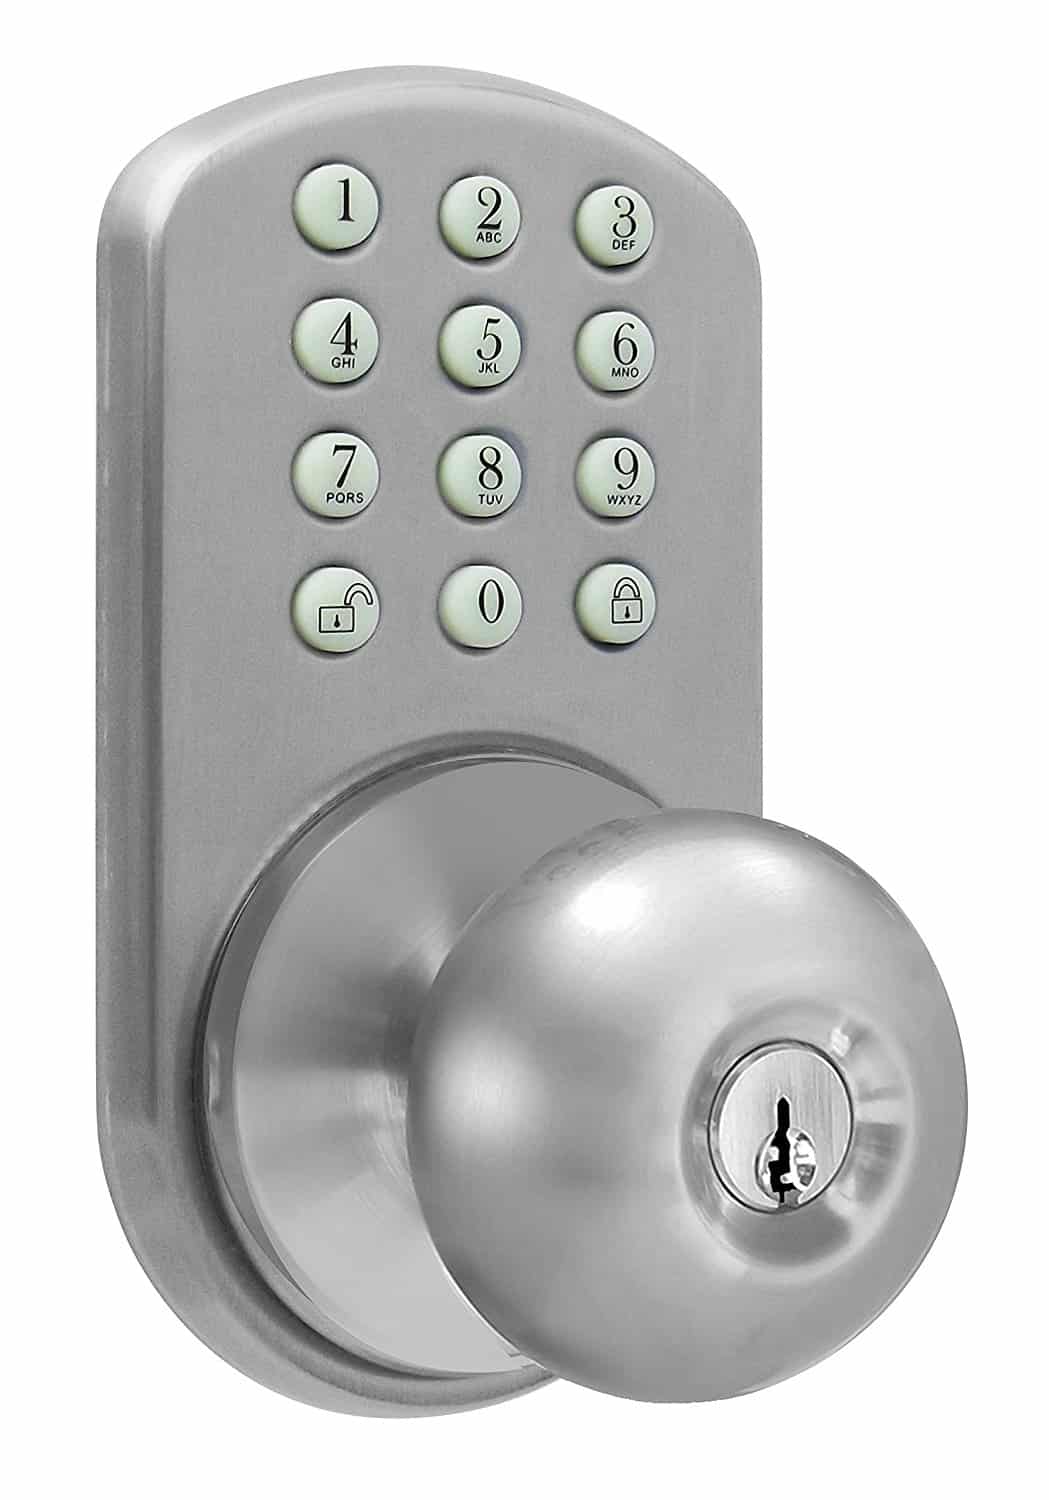 keypad door locks that link with phone app